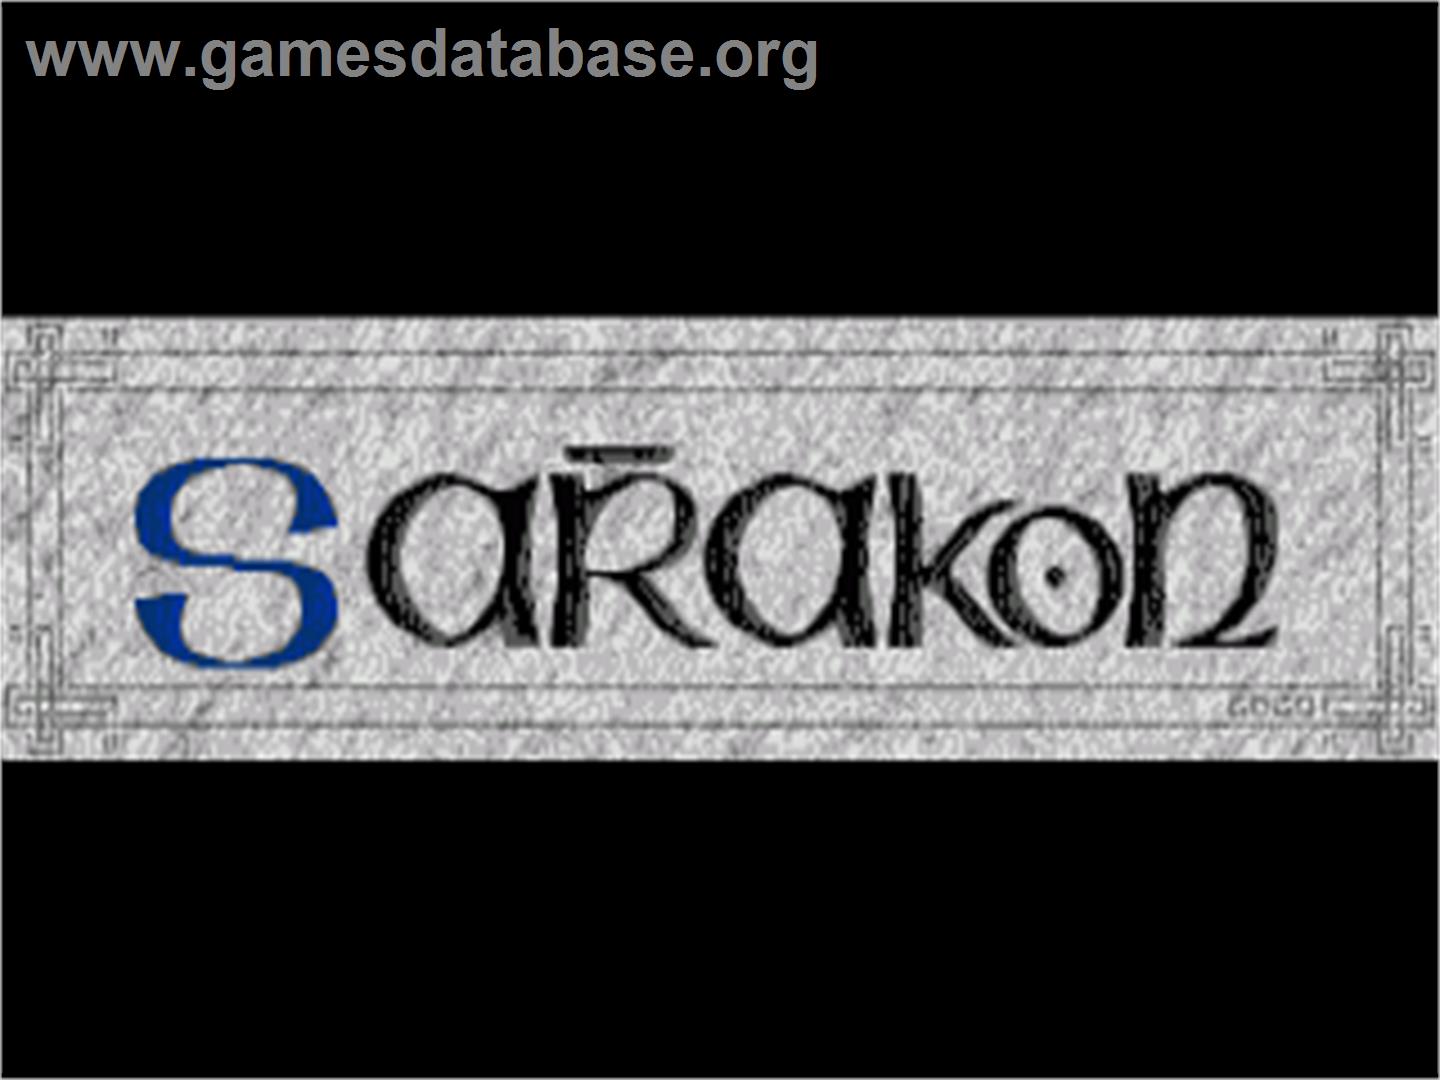 Sarakon - Commodore Amiga - Artwork - Title Screen